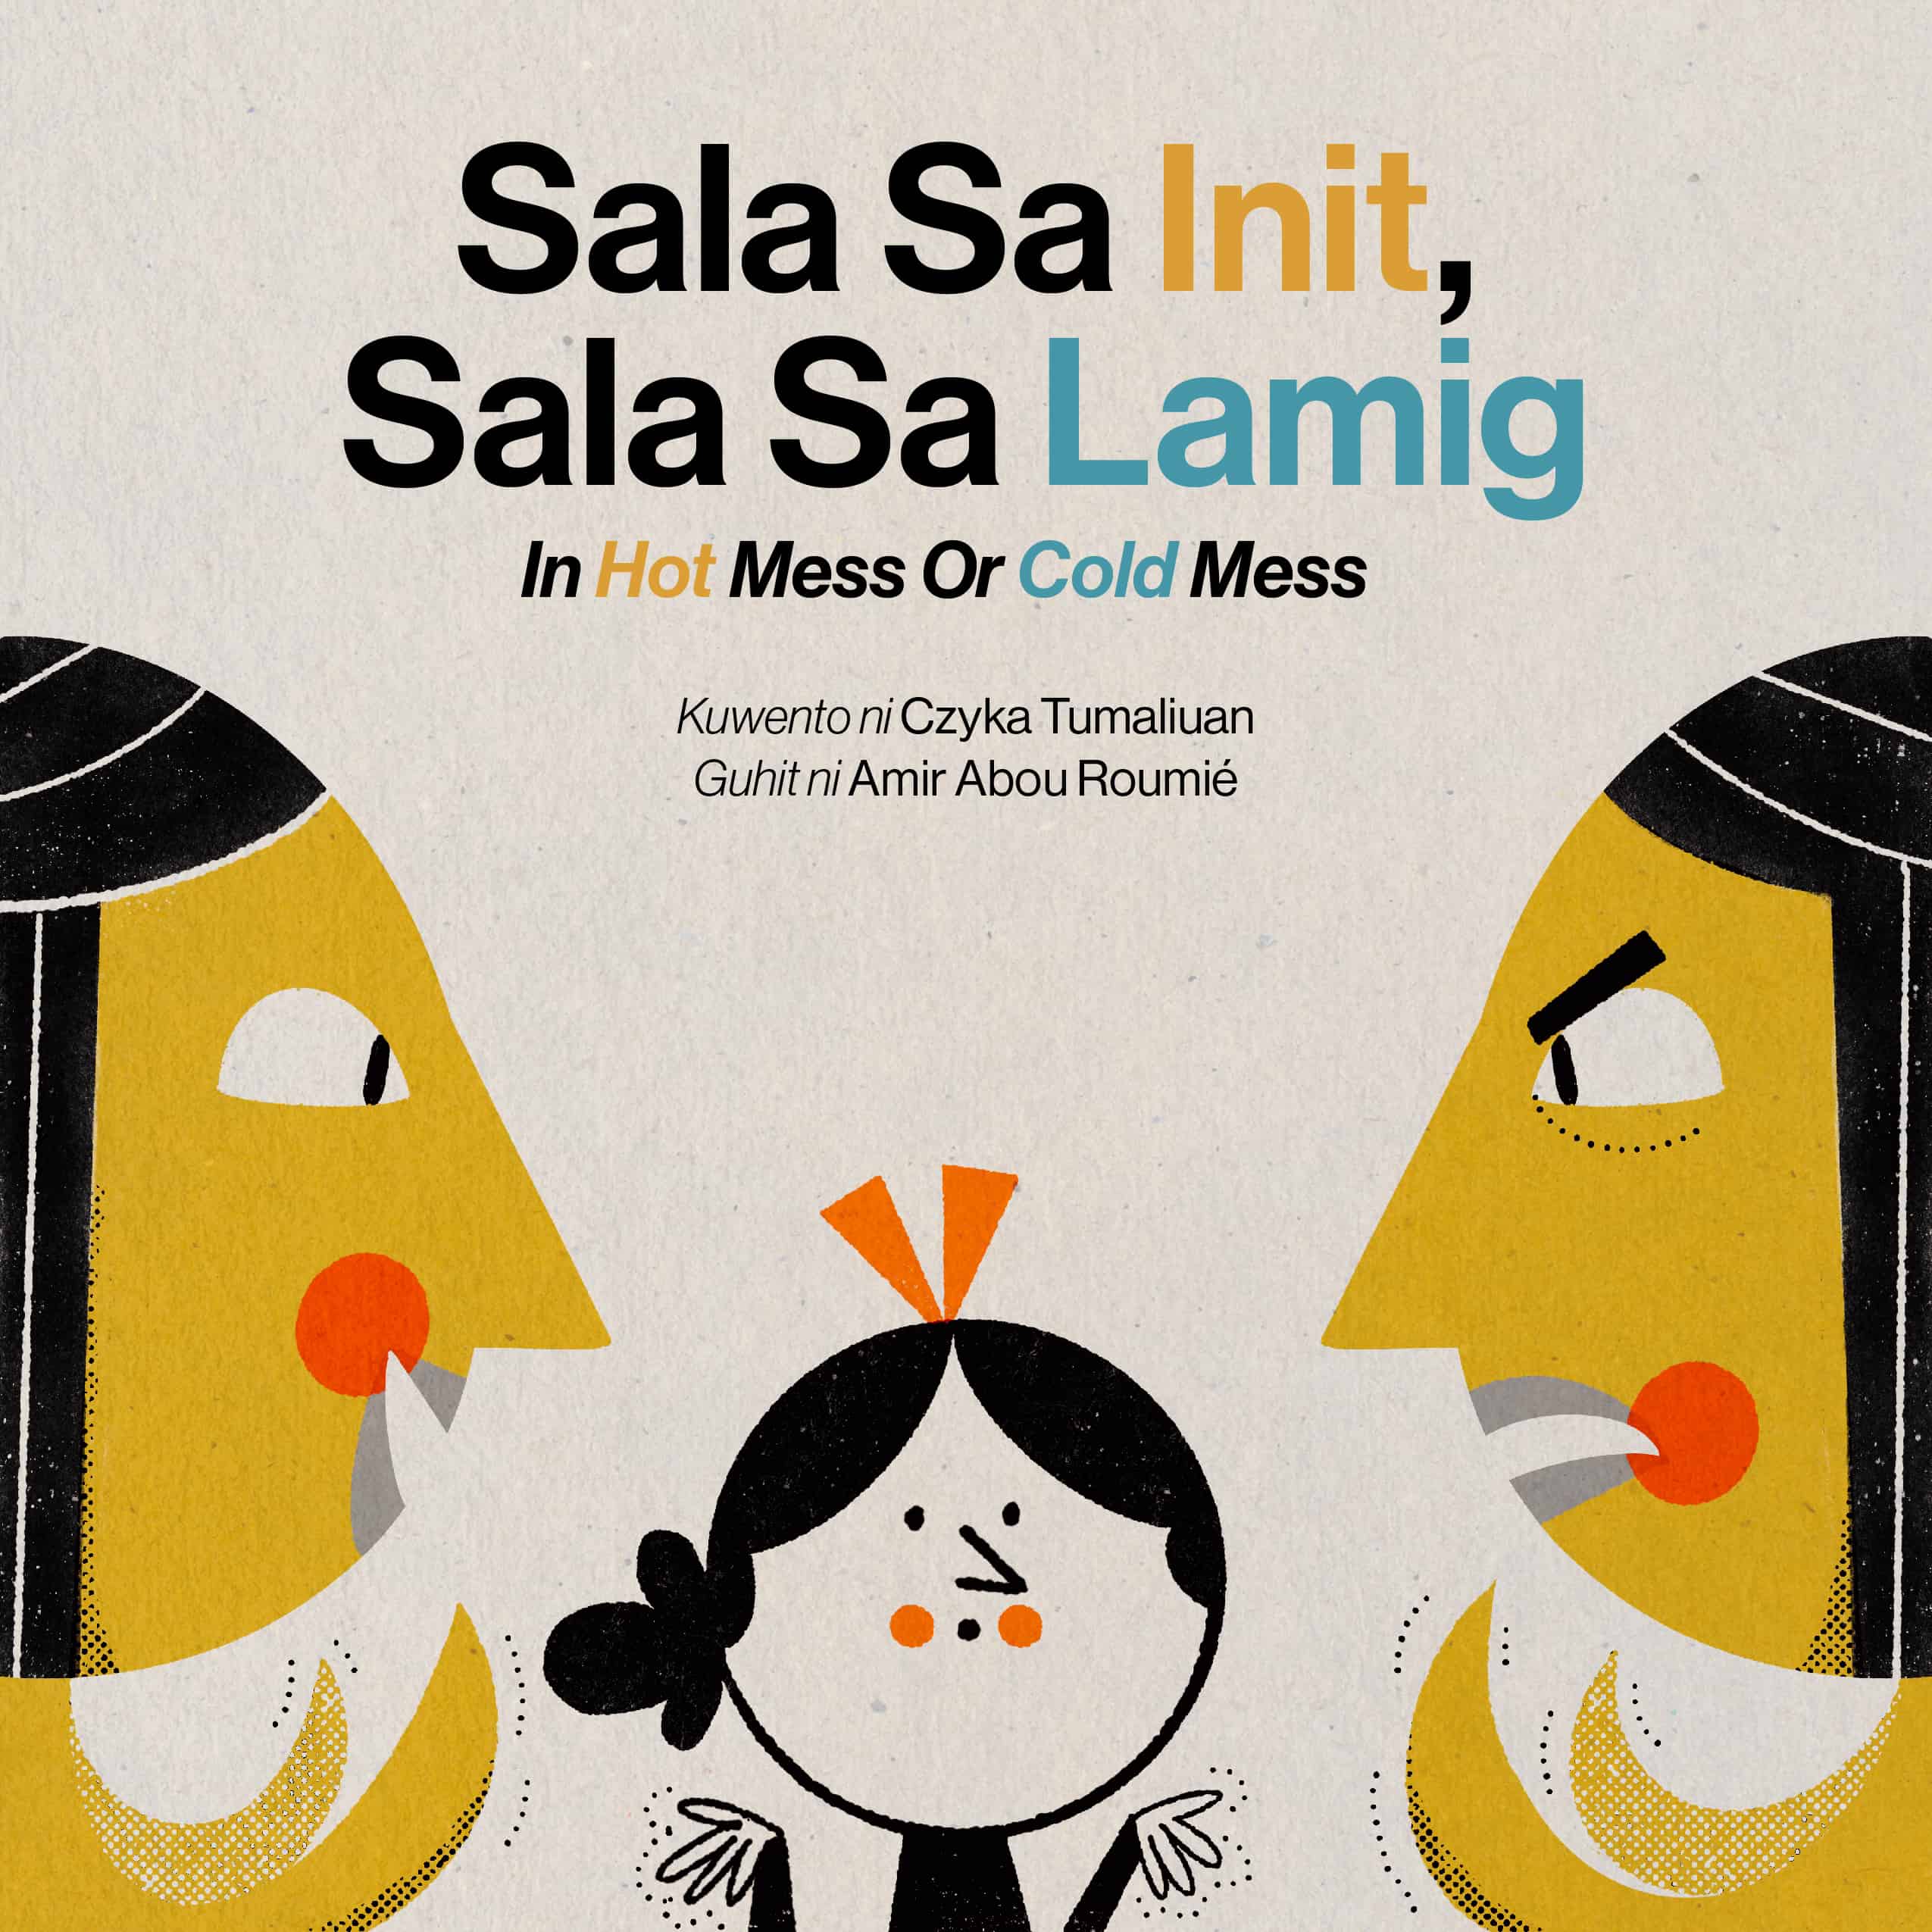 childrens book about bipolar disorder "Sala La Init, Sala Sa Lamig"